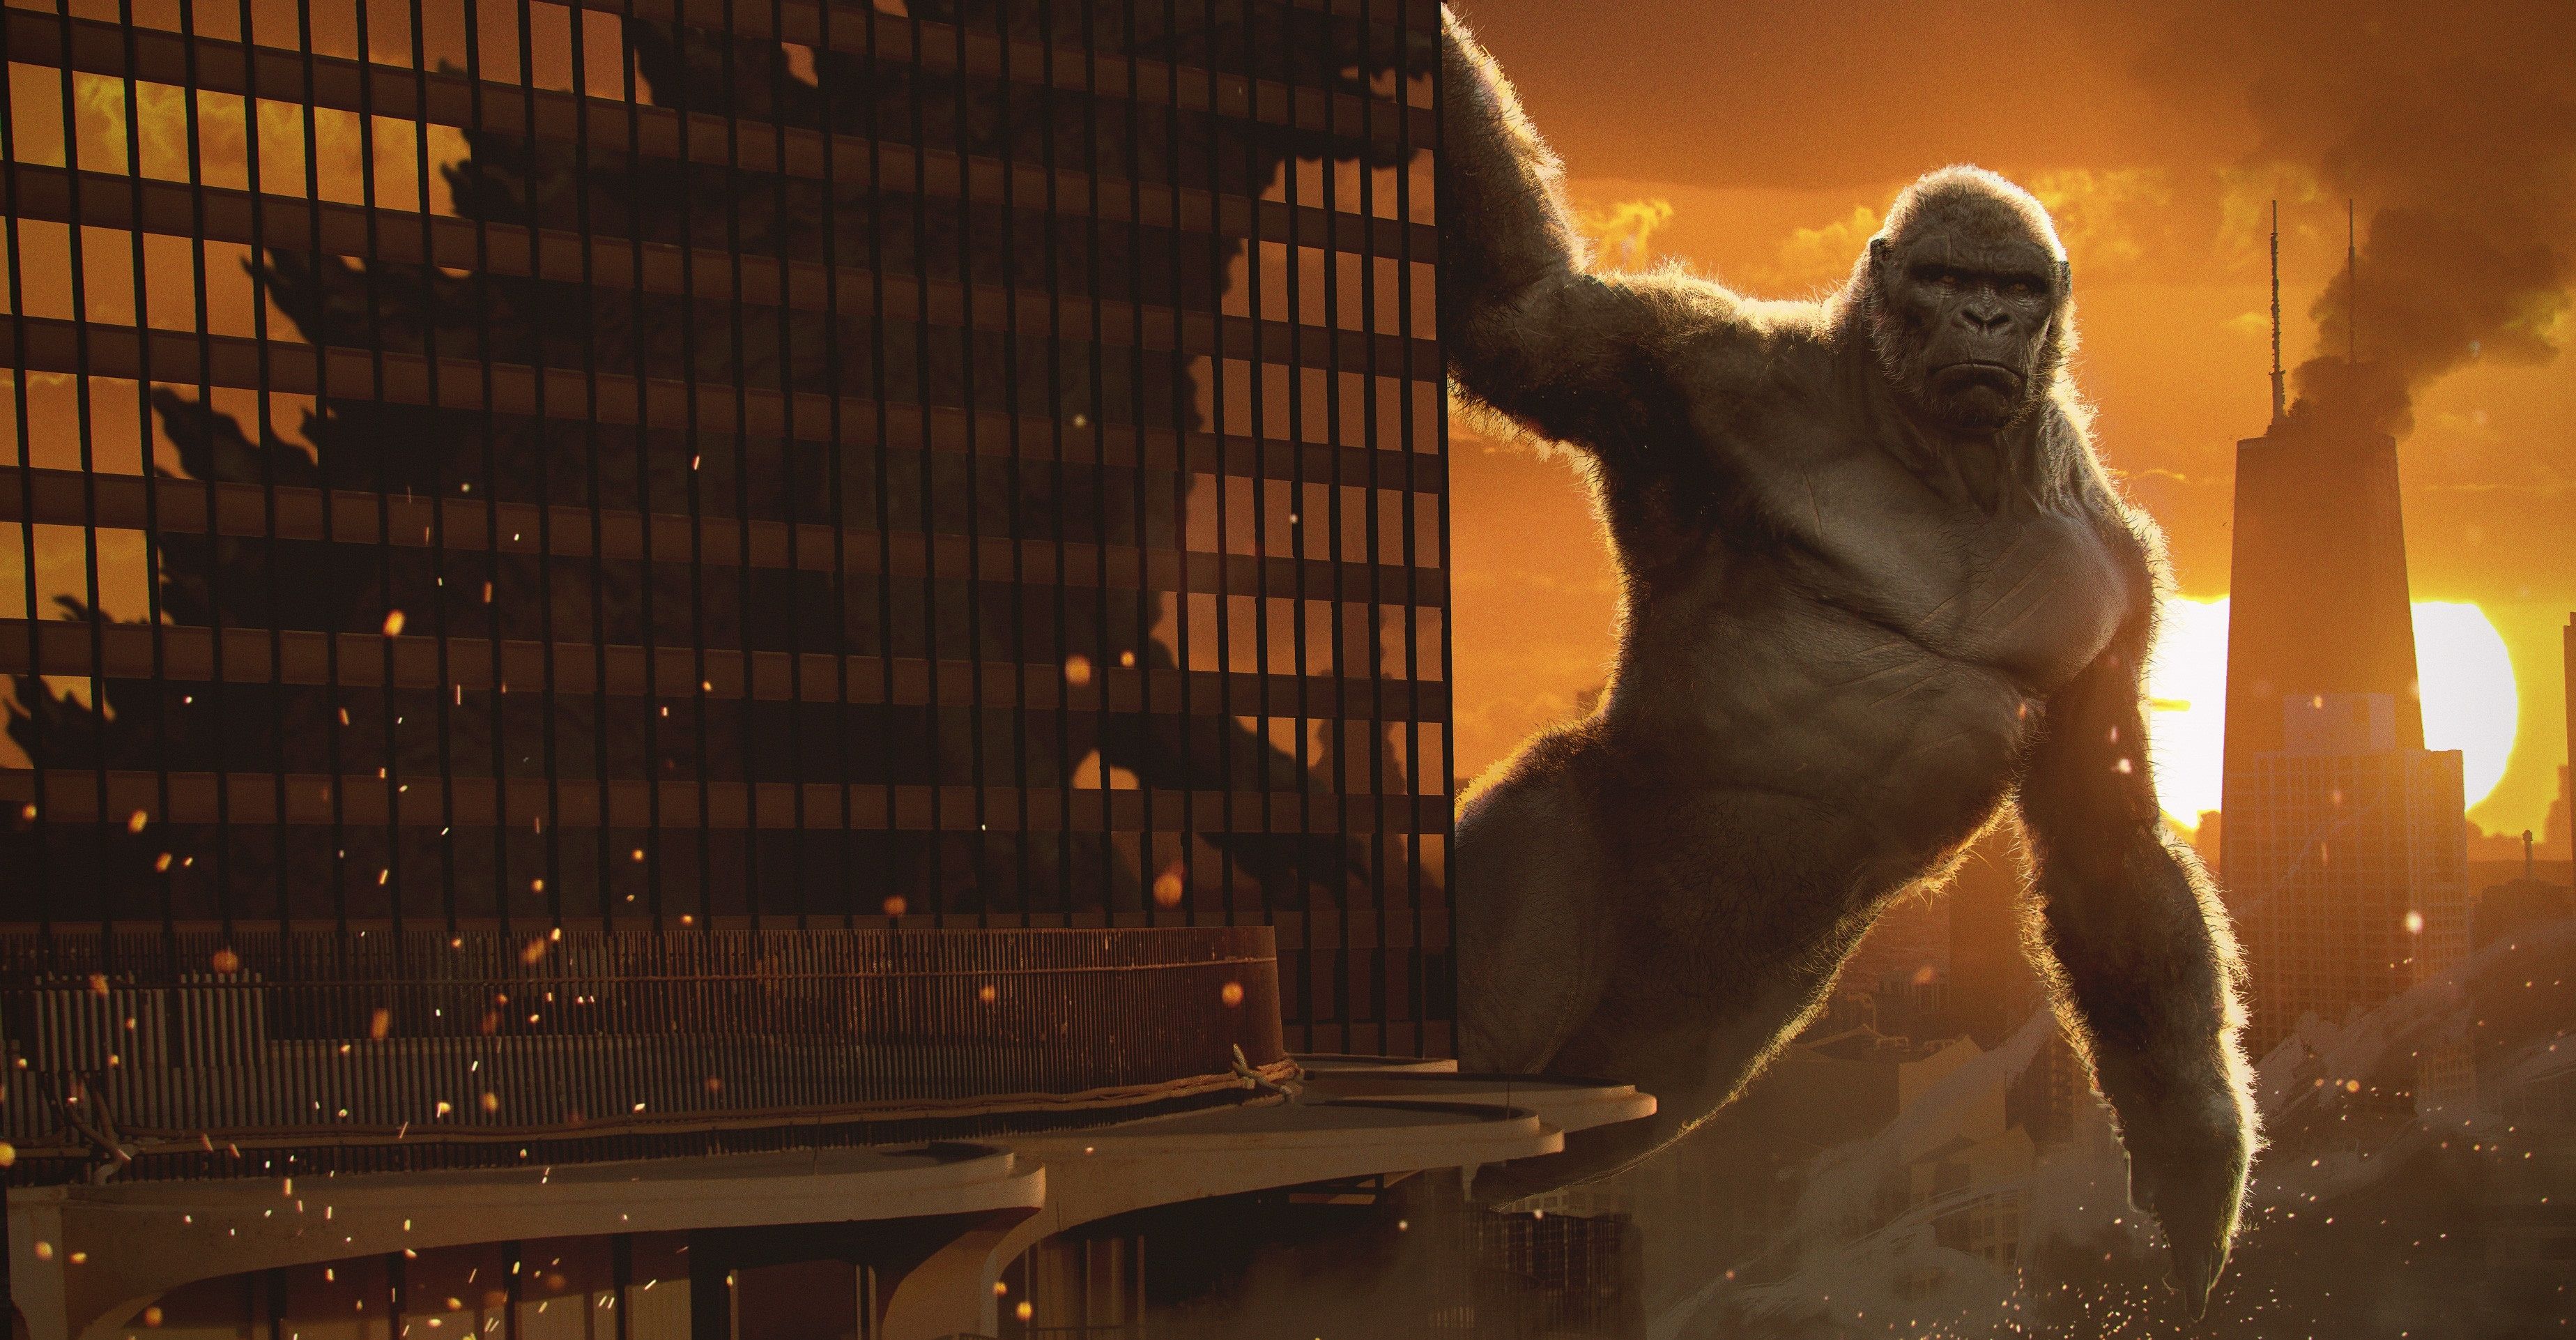 Kong Vs Godzilla 2020 Art 2560x1080 Resolution Wallpaper, HD Movies 4K Wallpaper, Image, Photo and Background